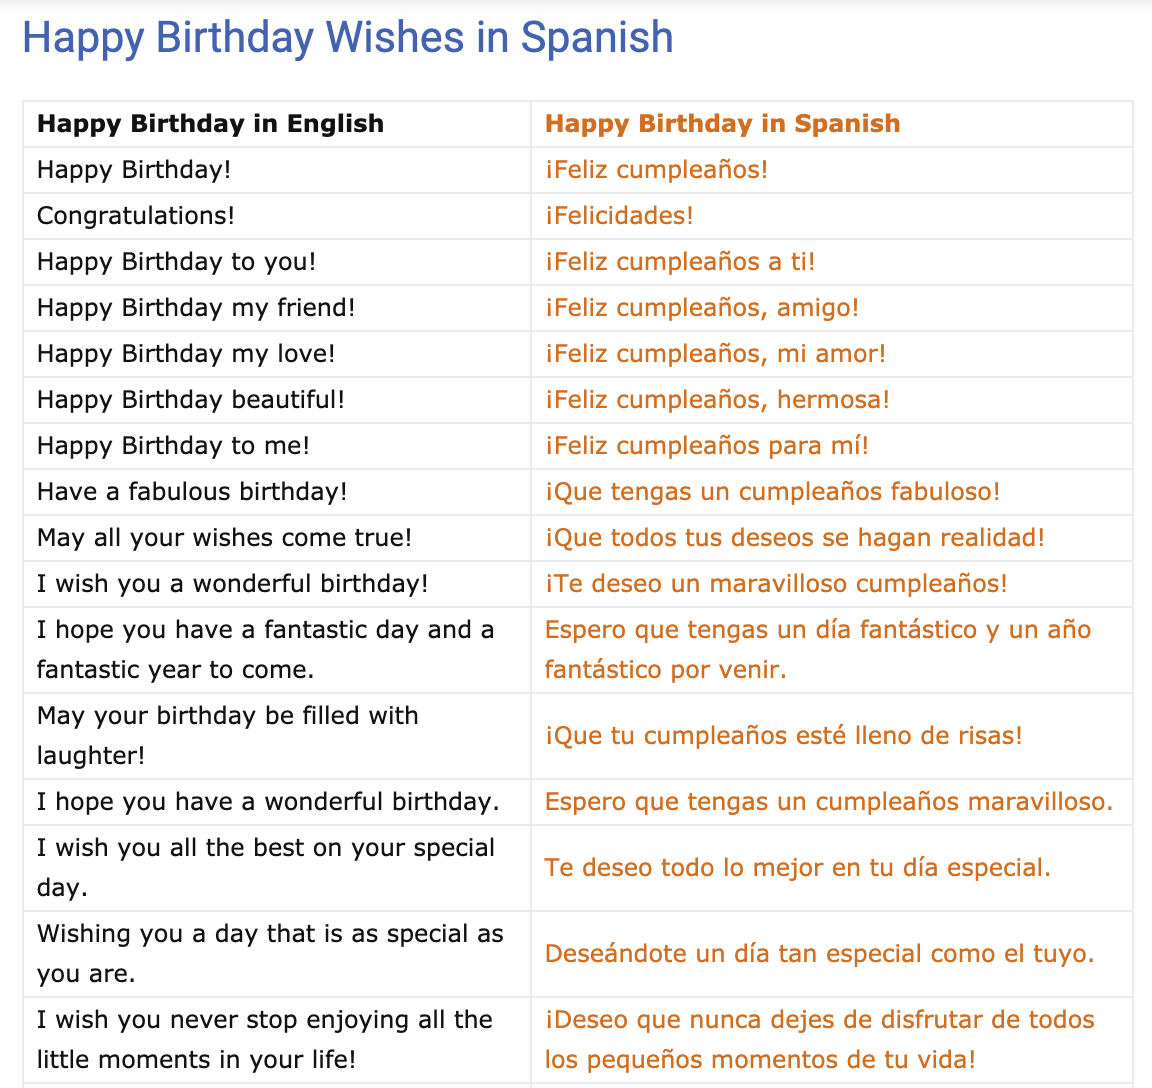 Translate felicidades to english